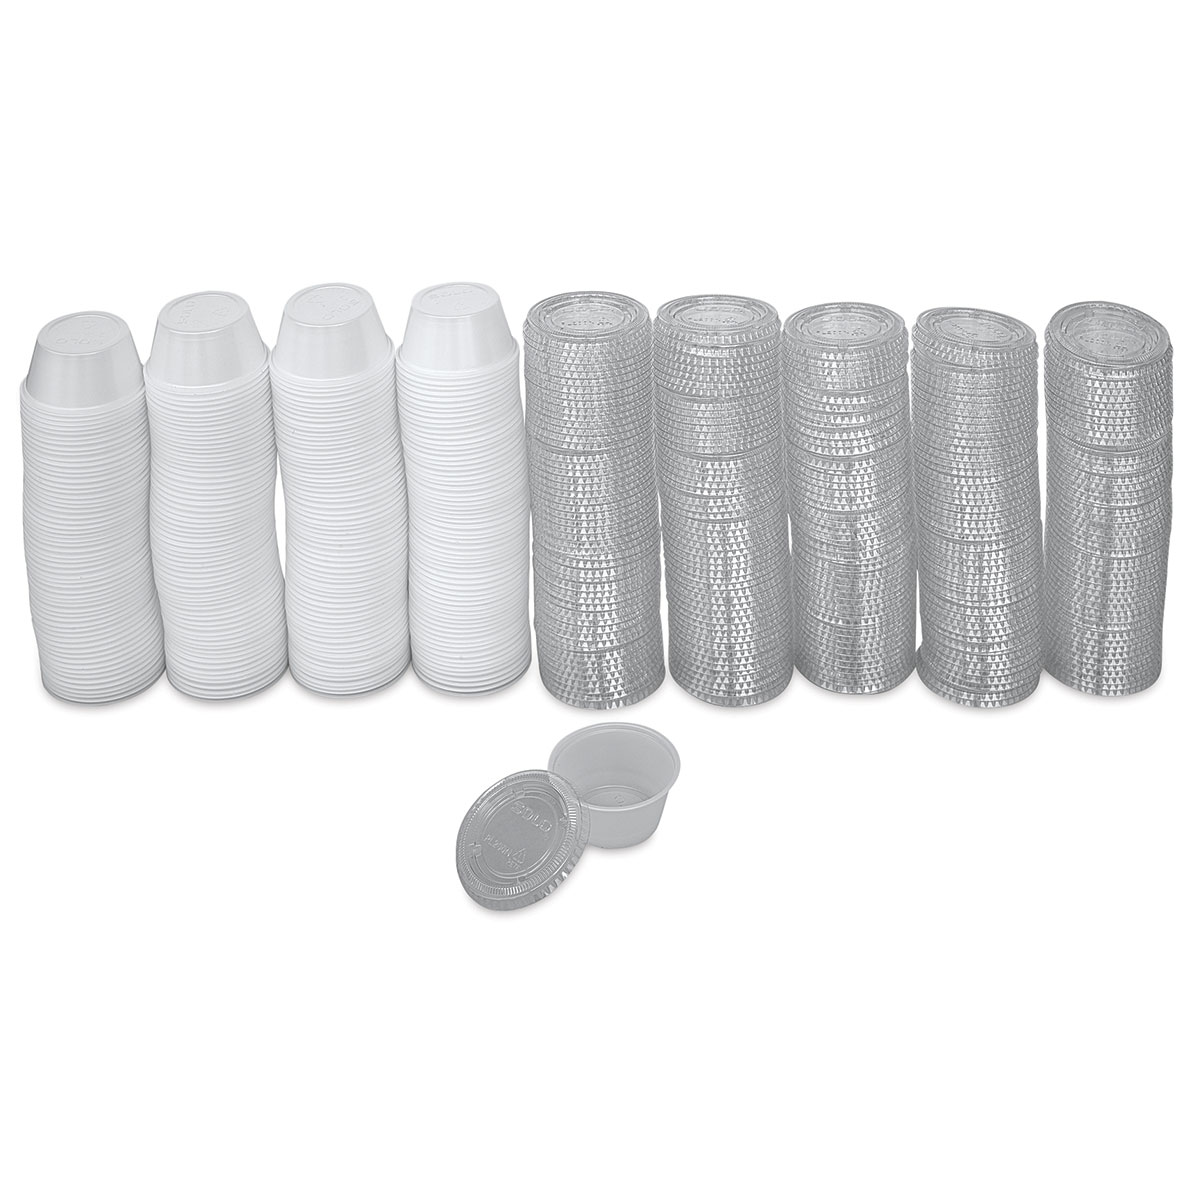 ULINE Plastic Cups with Lids - 2 oz, Pkg of 25